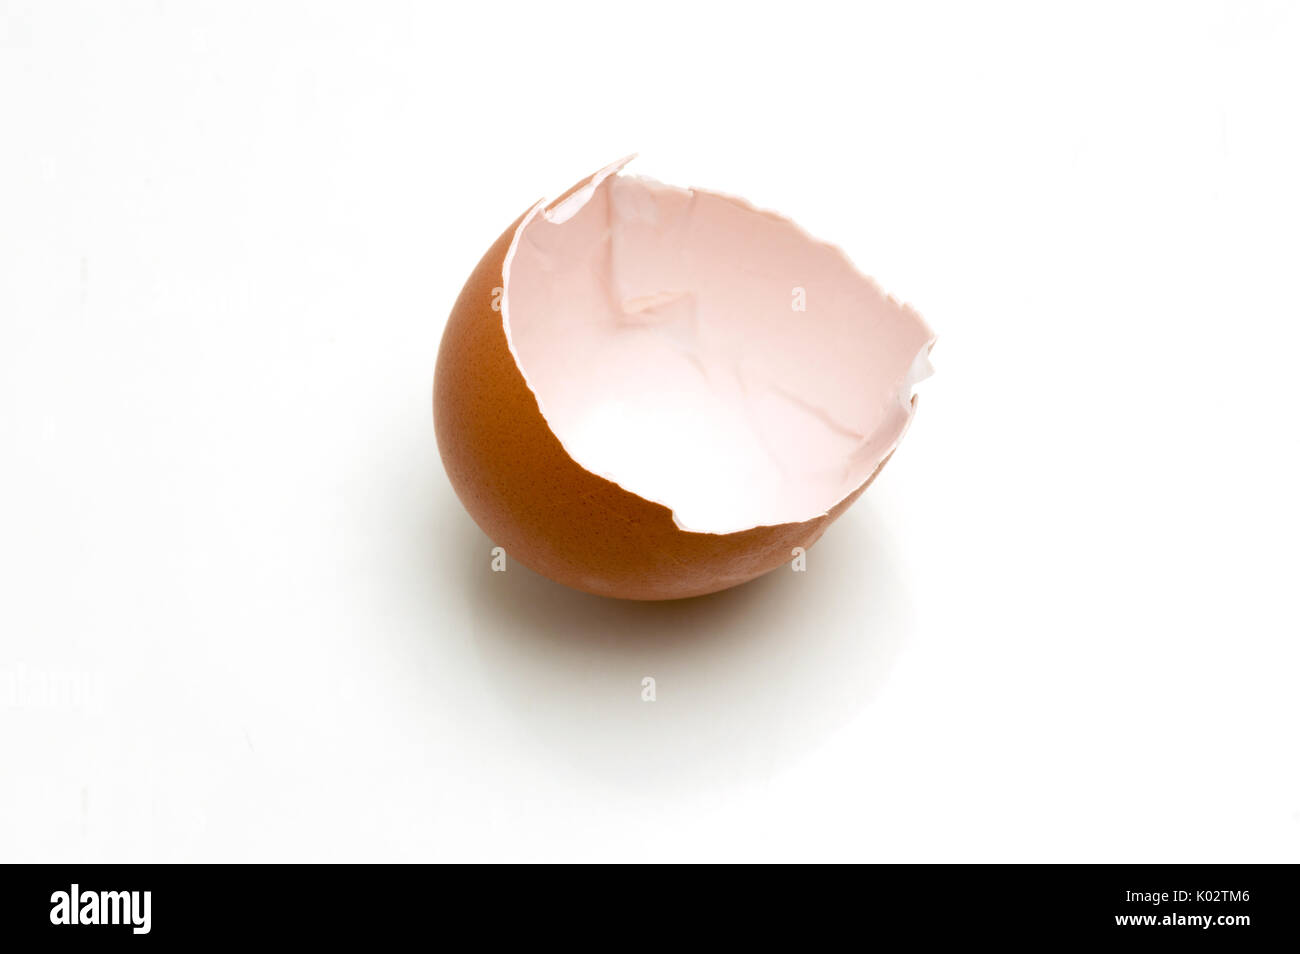 Broken egg isolated on white background Stock Photo